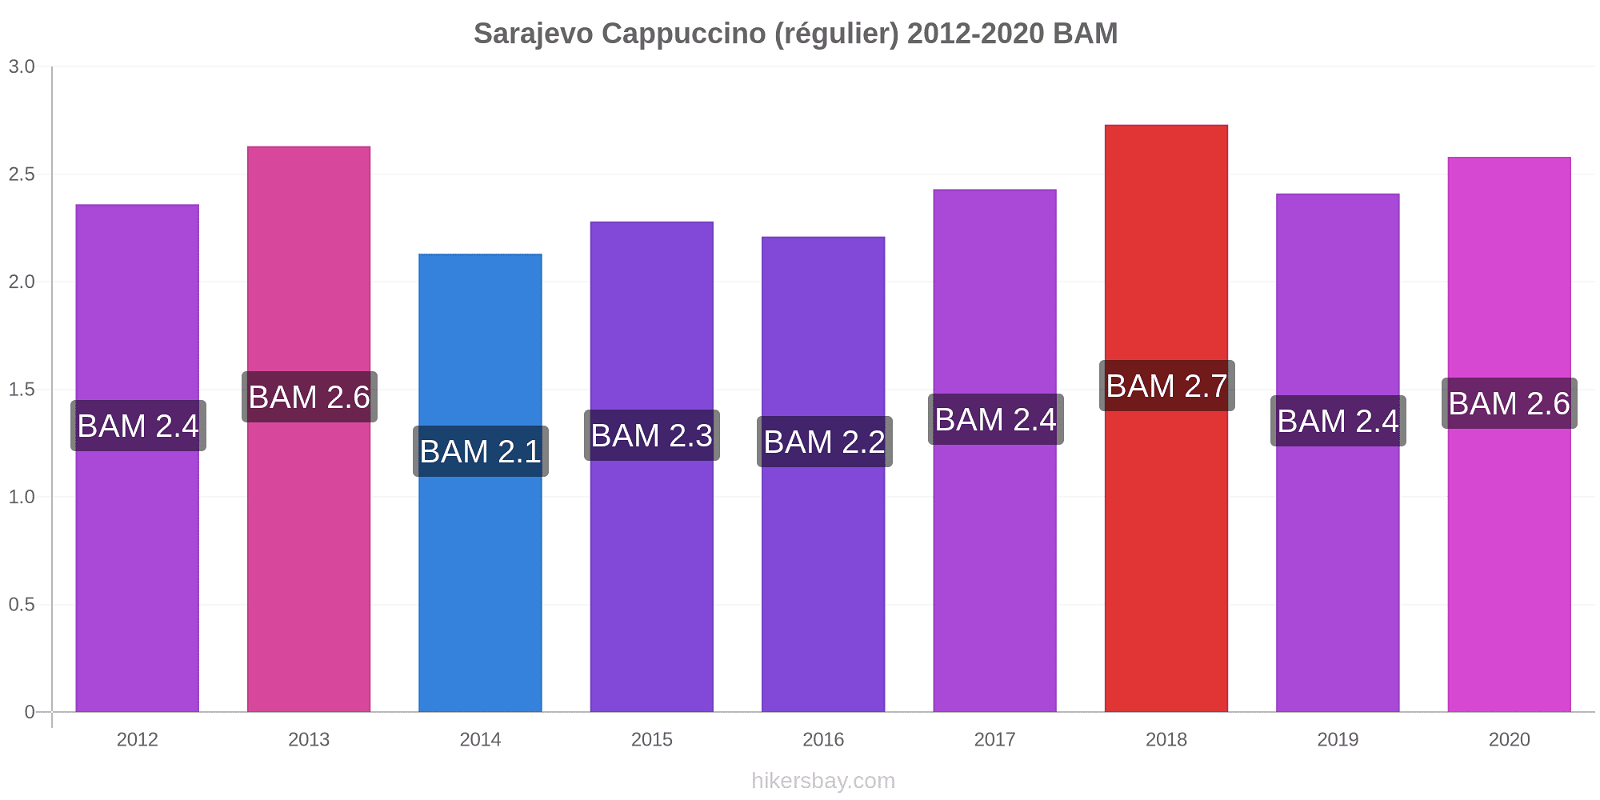 Sarajevo changements de prix Cappuccino (régulier) hikersbay.com